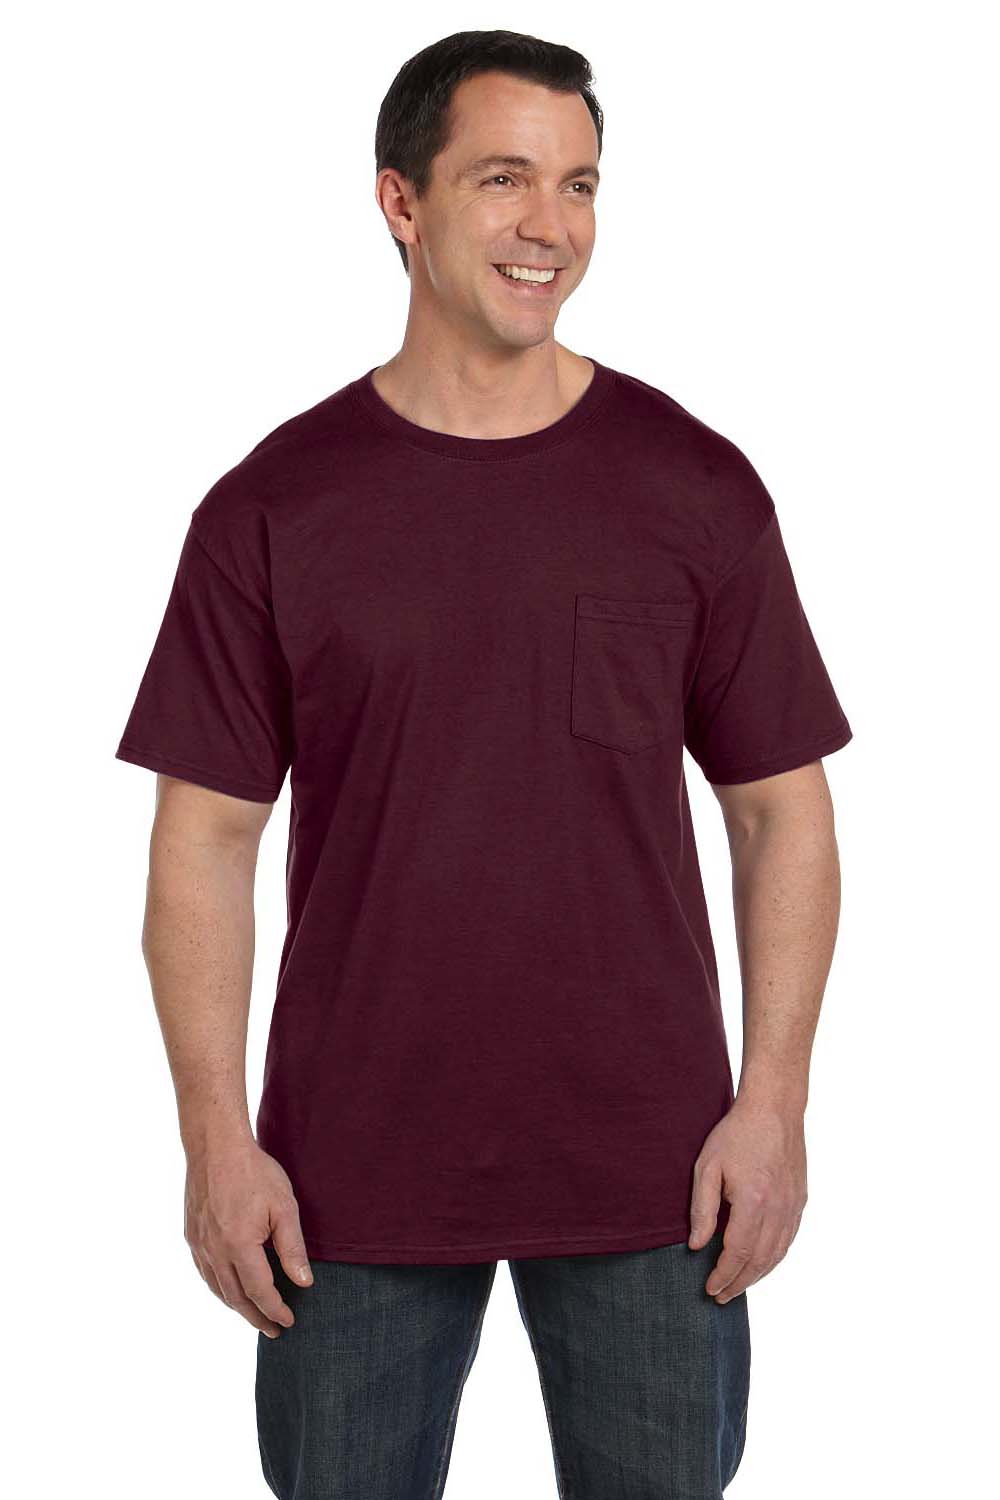 Hanes 5190P Mens Beefy-T Short Sleeve Crewneck T-Shirt w/ Pocket Maroon Front